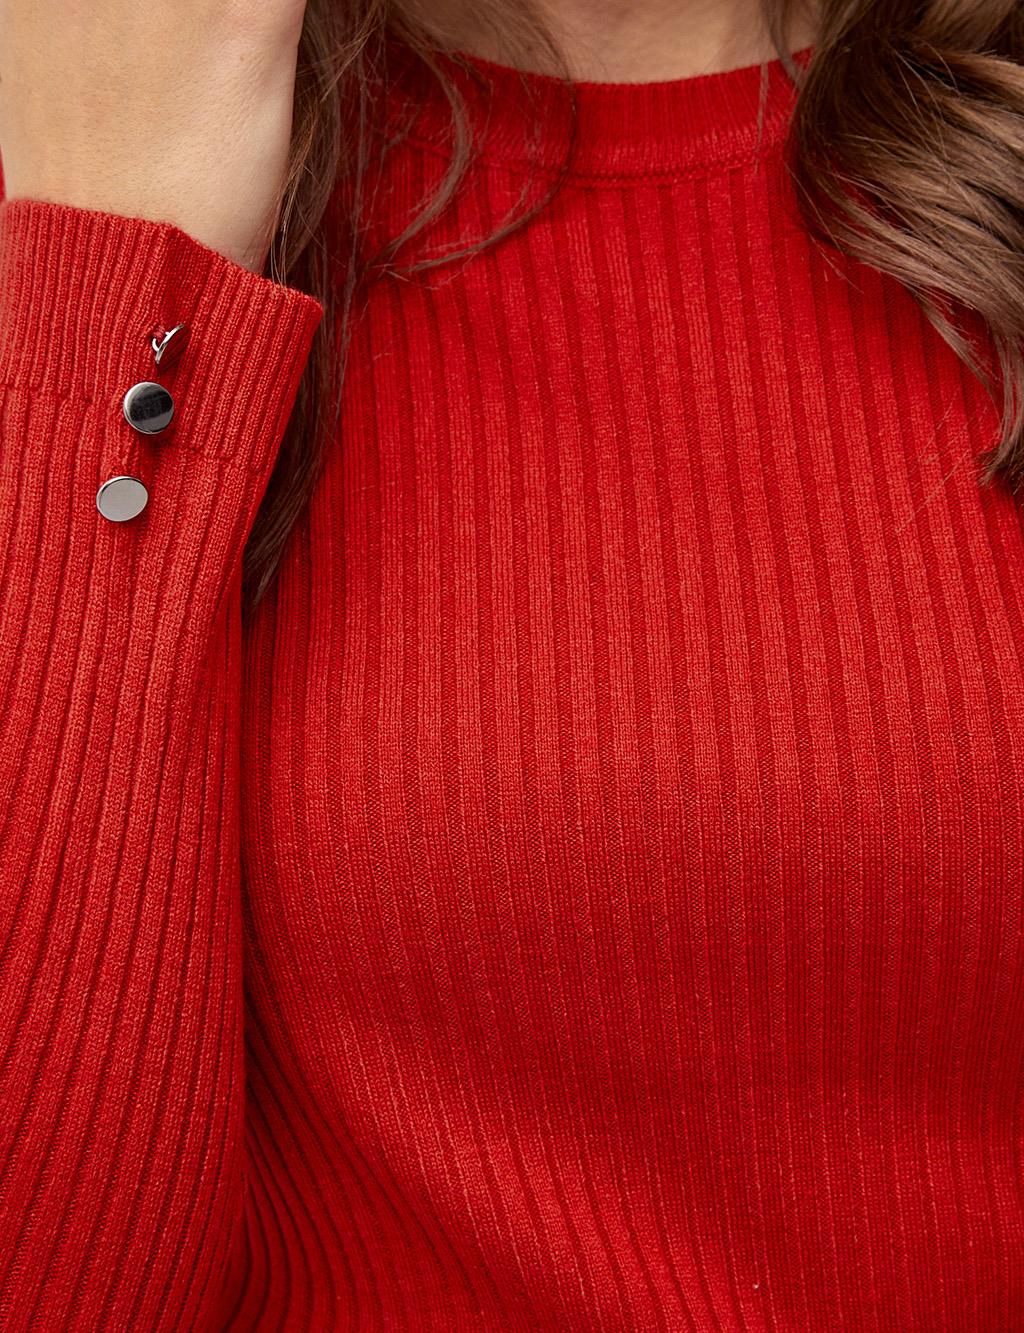 Round Neck Collar Corduroy Knitwear Blouse Red